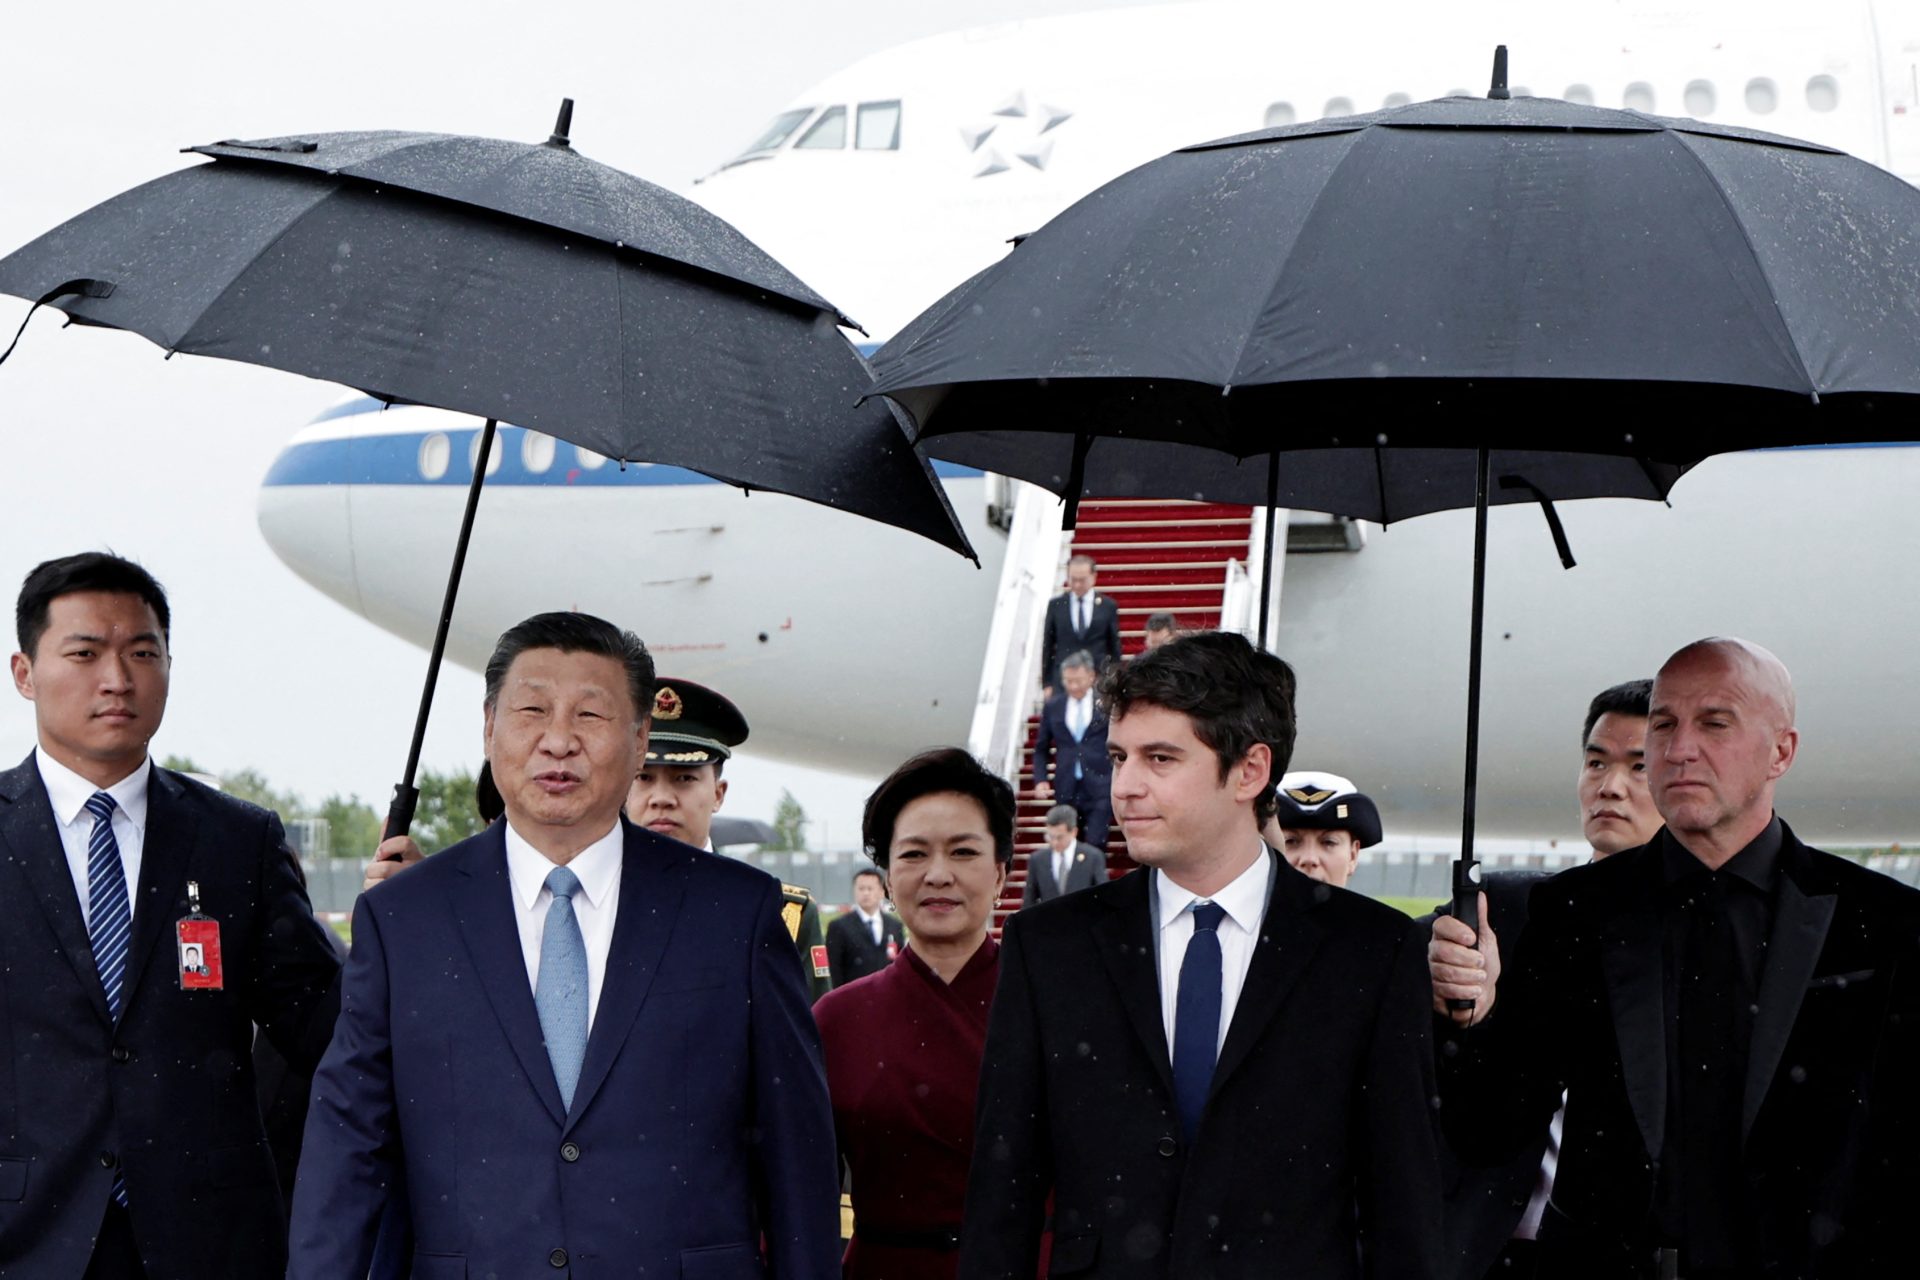 Xi Jinping lance son premier voyage européen en France en 5 ans